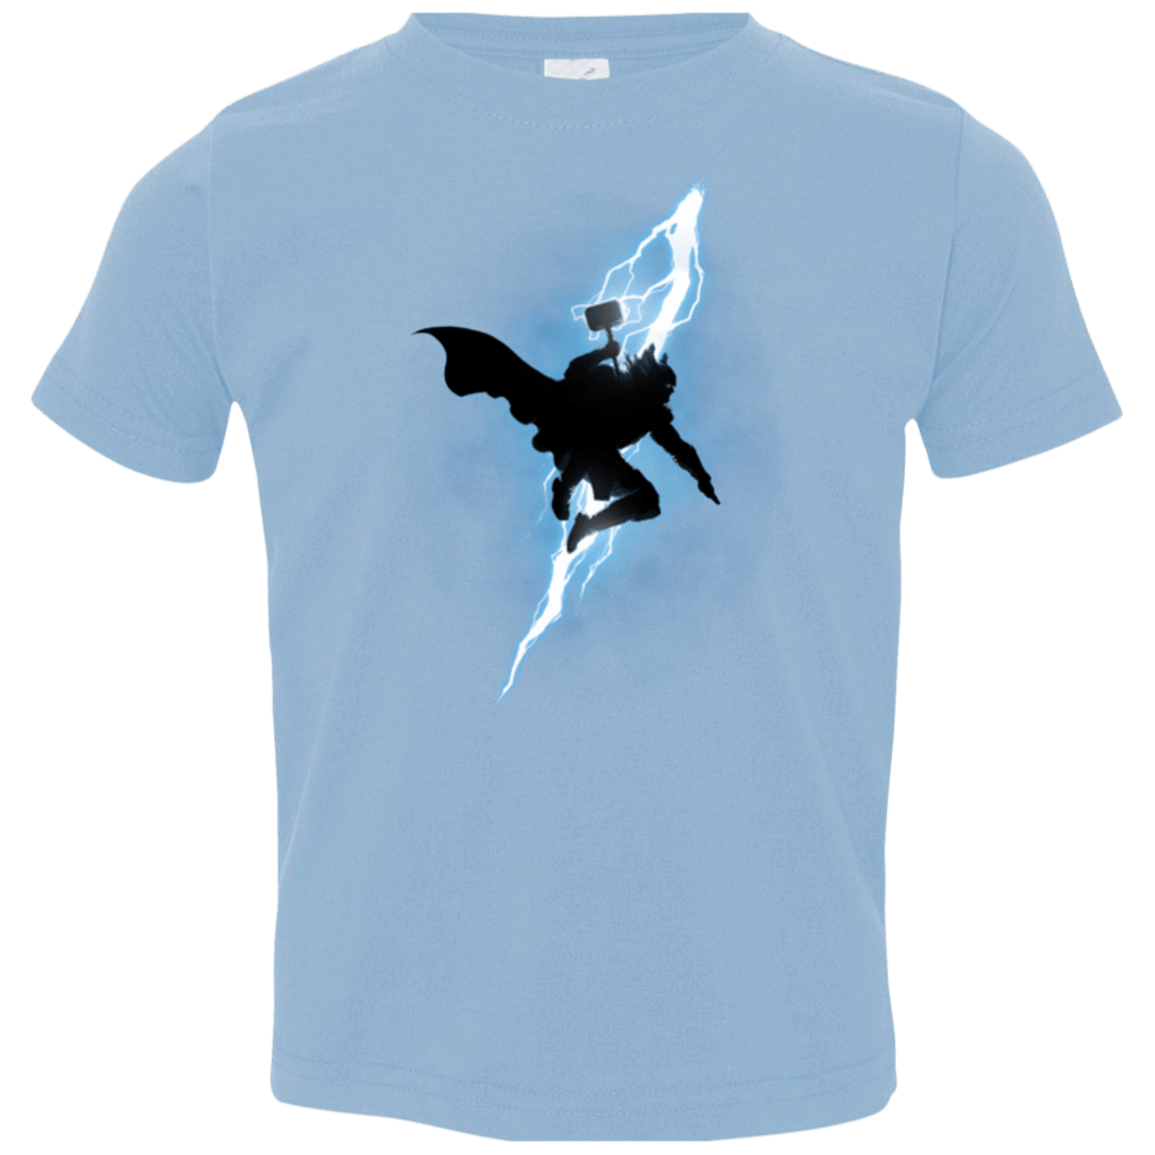 T-Shirts Light Blue / 2T The Thunder God Returns Toddler Premium T-Shirt